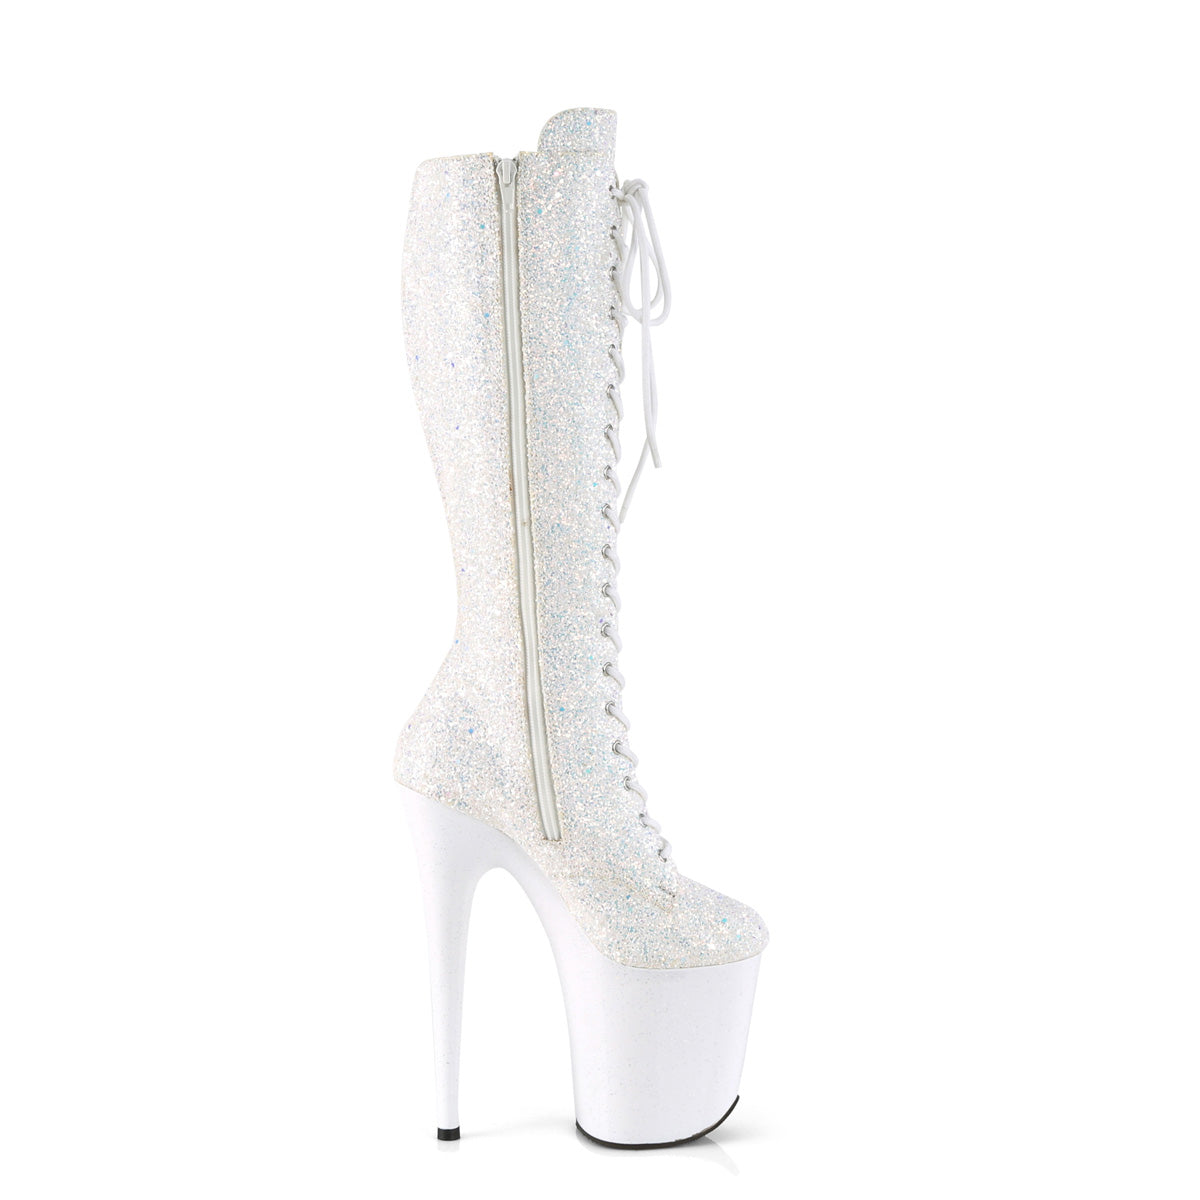 Pleaser Flamingo-2020MG Sexy Pole Dancer White Glitter Platform Boots